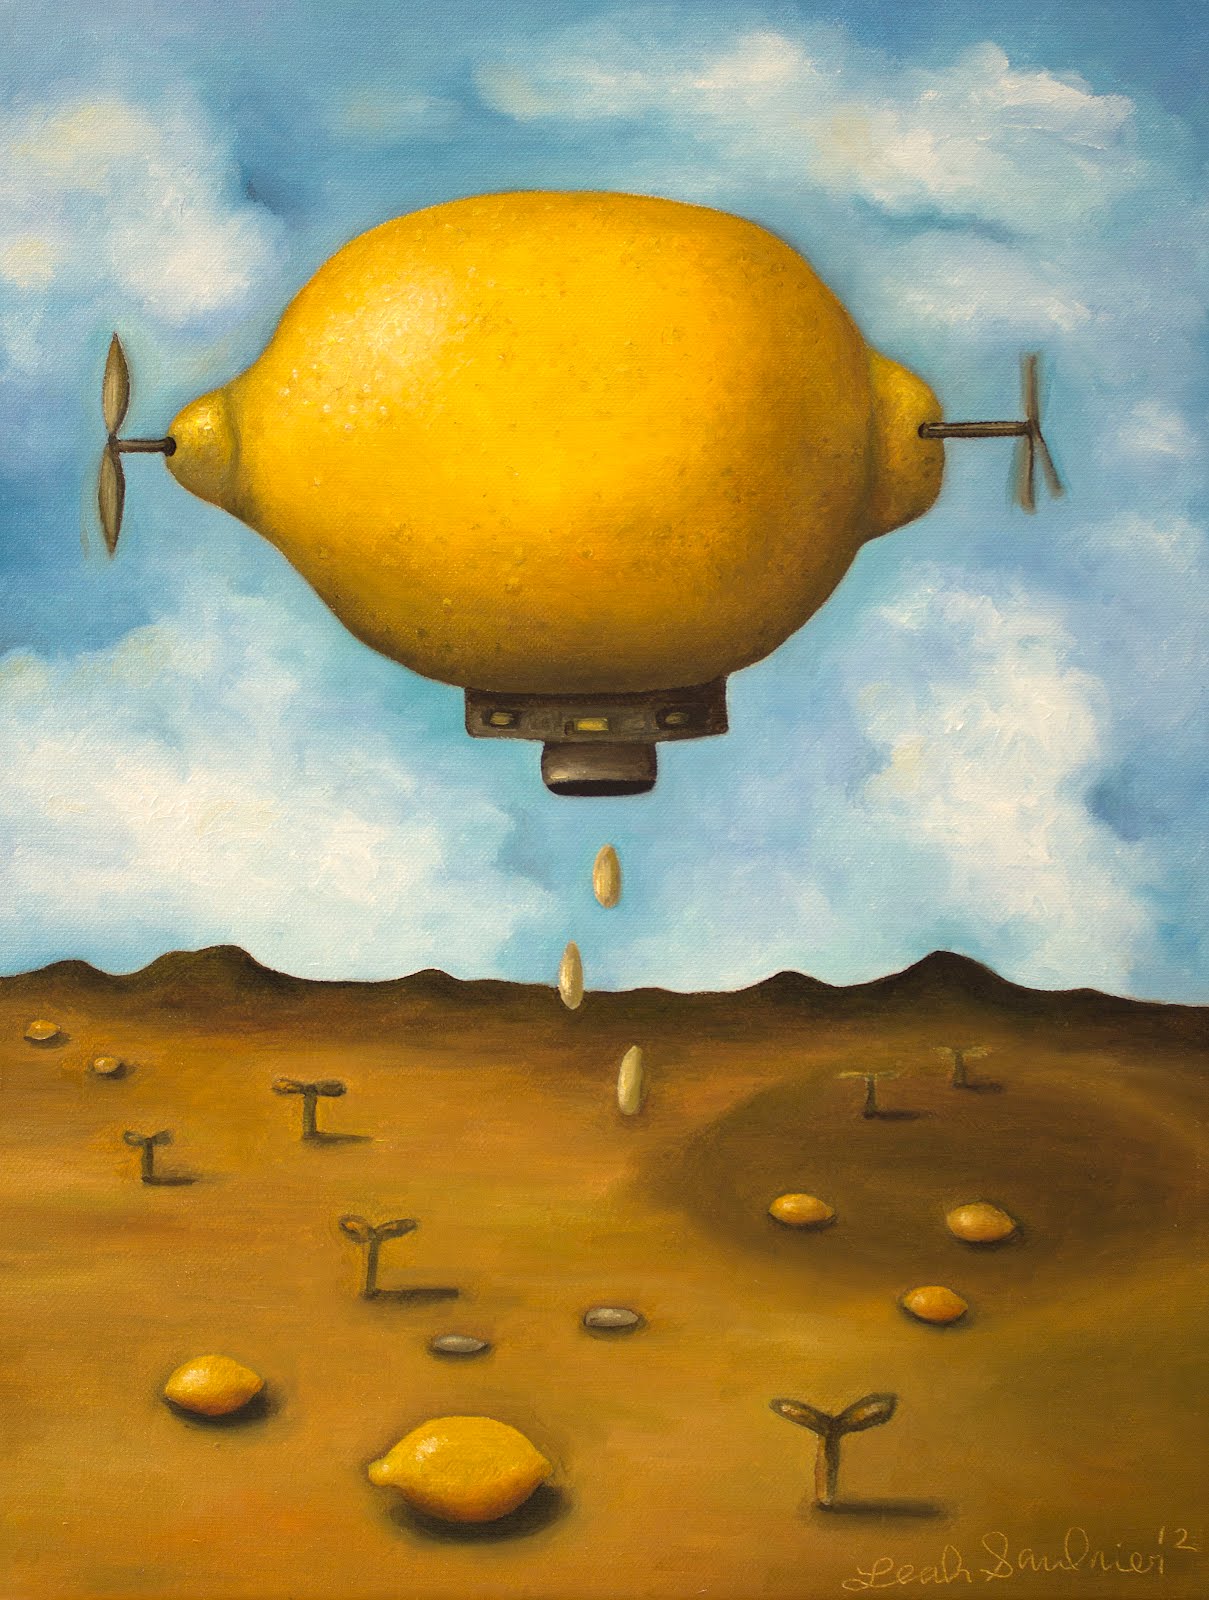 General 1209x1600 digital art fantasy art surreal fruit lemons landscape clouds painting portrait display seeds airships